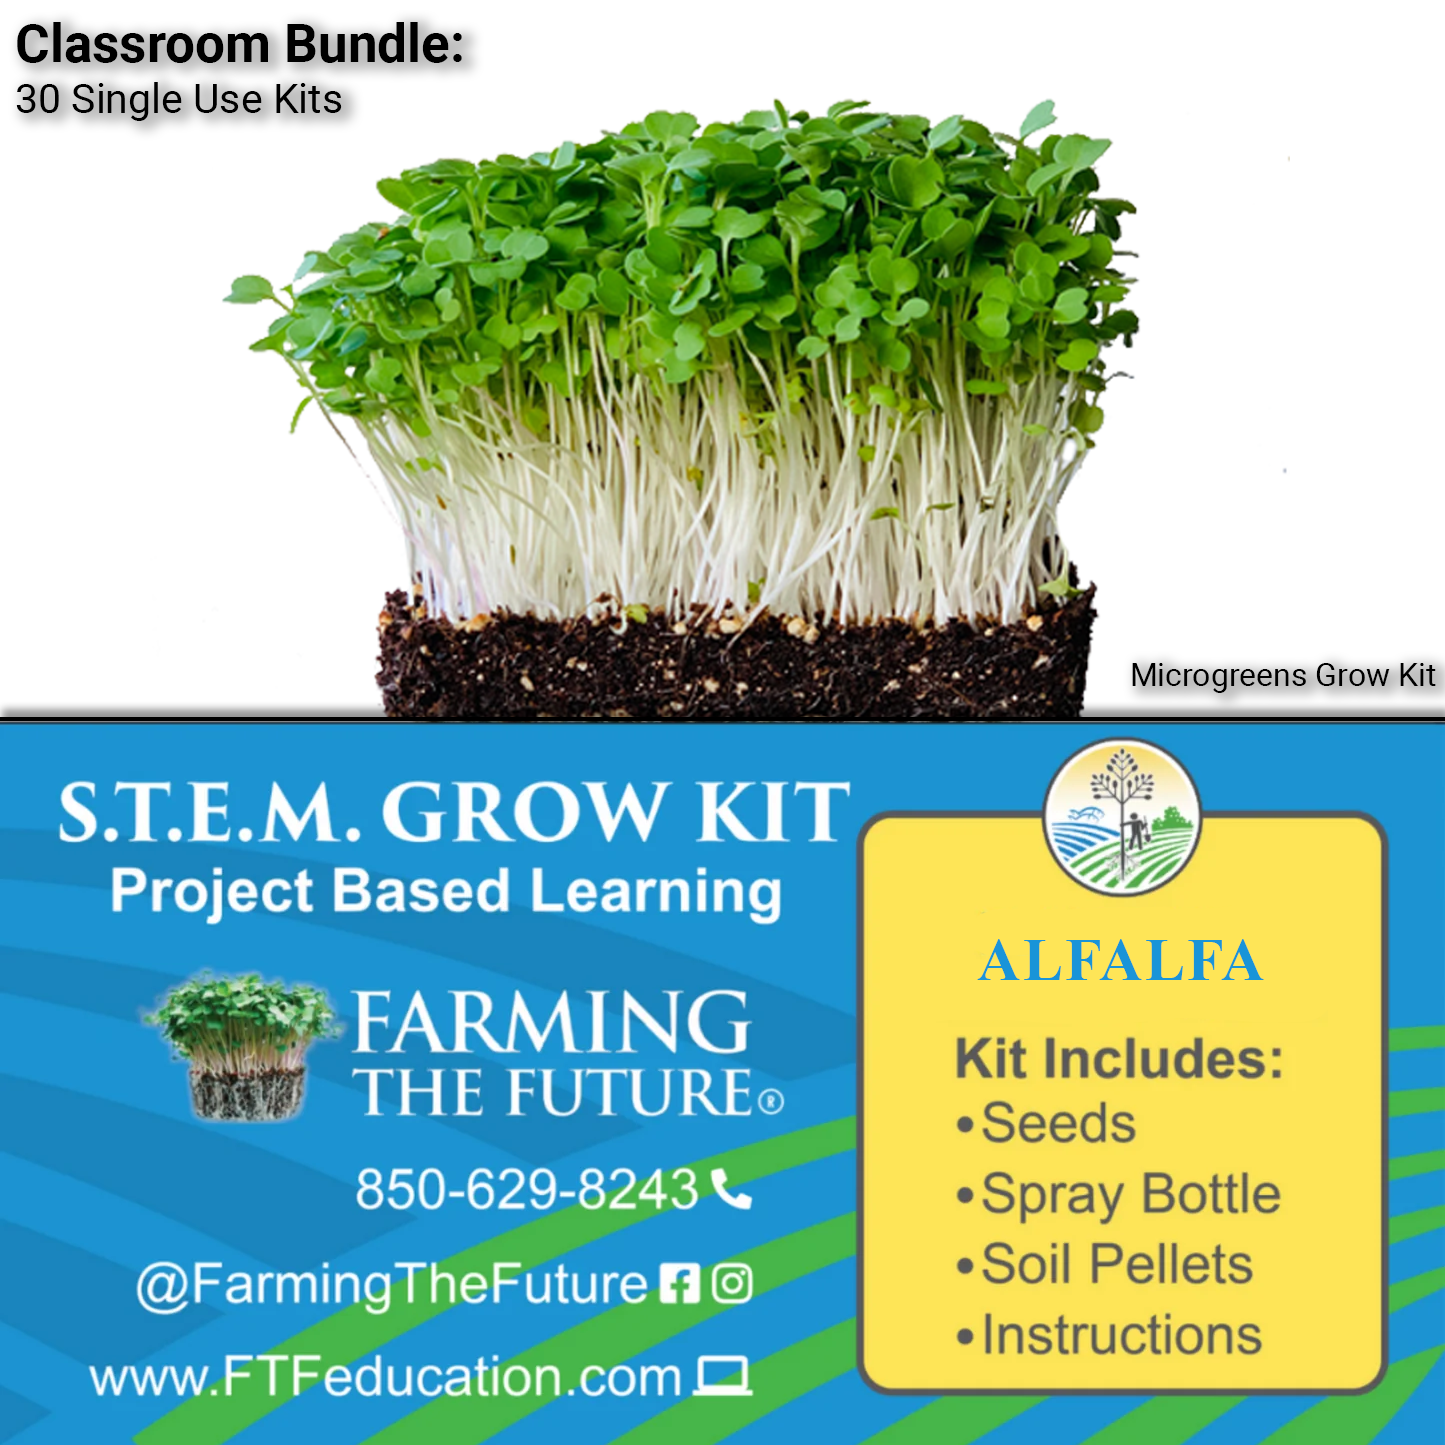 K-12 STEM Student Alfalfa Microgreen Kit - Classroom Bundle